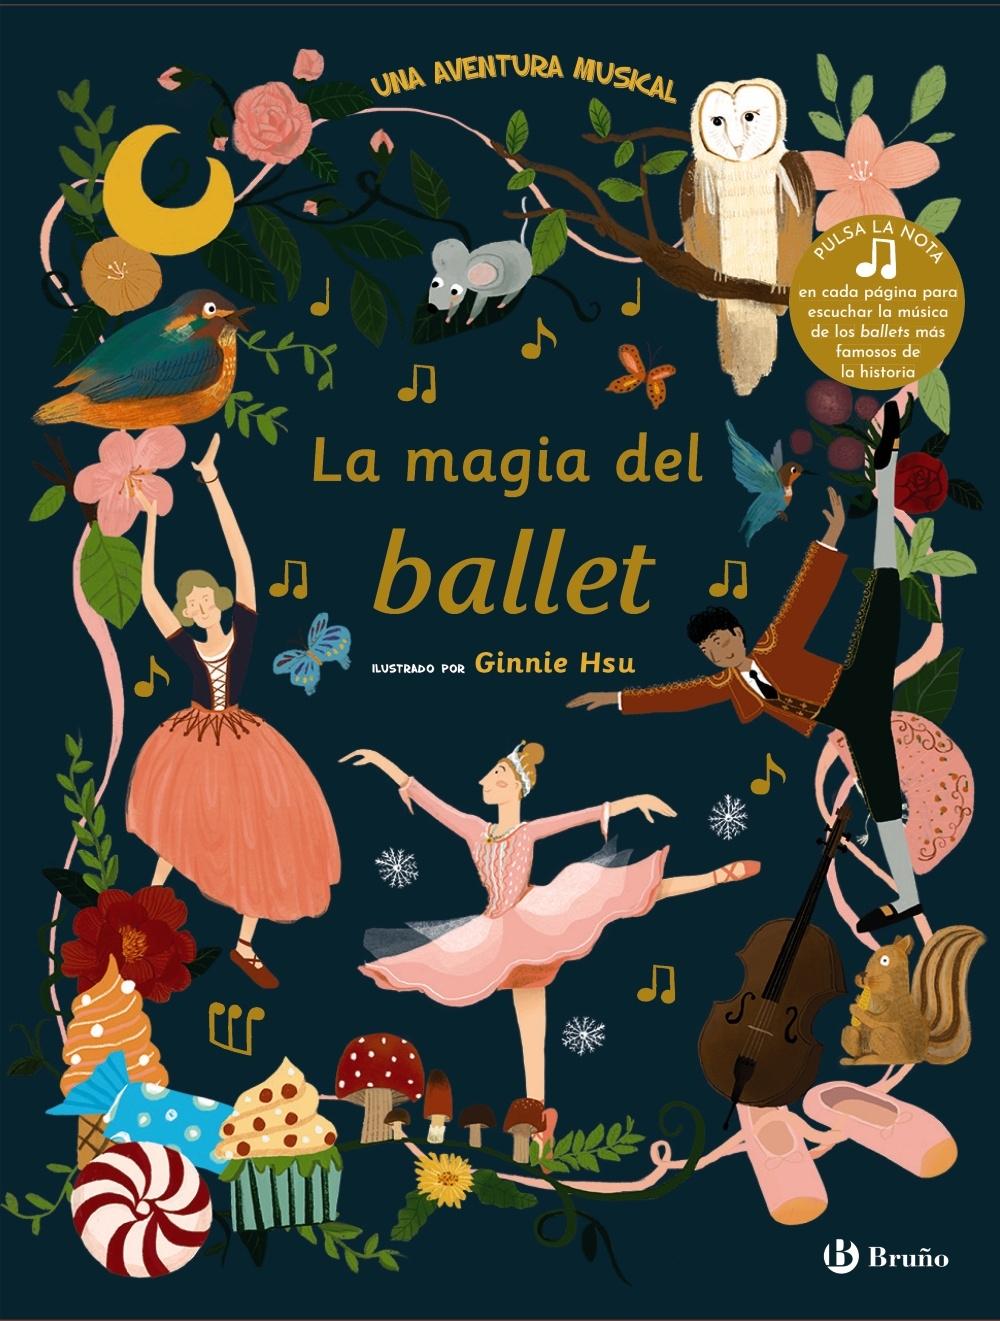 LA MAGIA DEL BALLET "UNA AVENTURA MUSICAL"